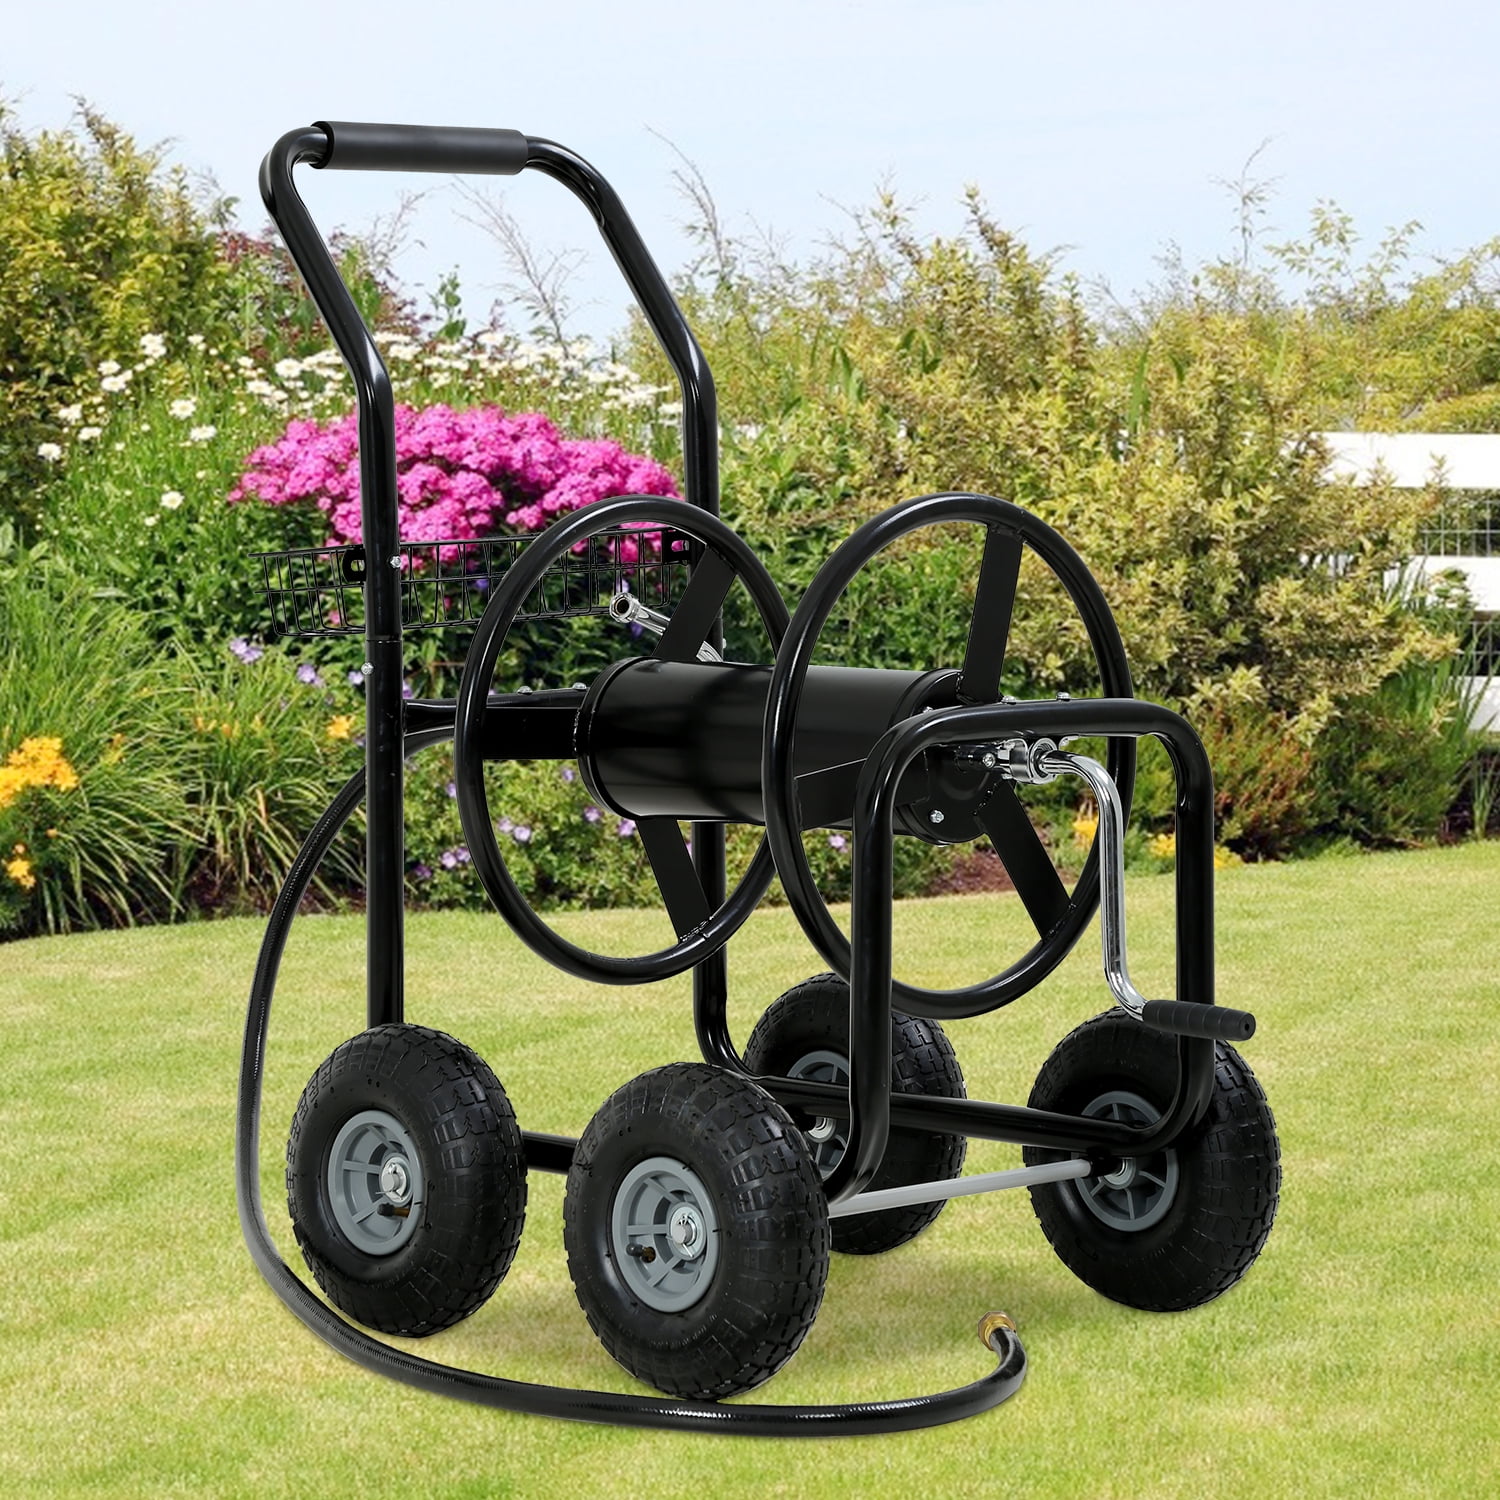 YRLLENSDAN Garden Hose Reel Cart with Wheels, Holds 300-Feet of 5/8 Hose  Capacity Outdoor Heavy Duty Water Hose Reel Cart Planting Lawn Sprinklers for  Yard - Tan 